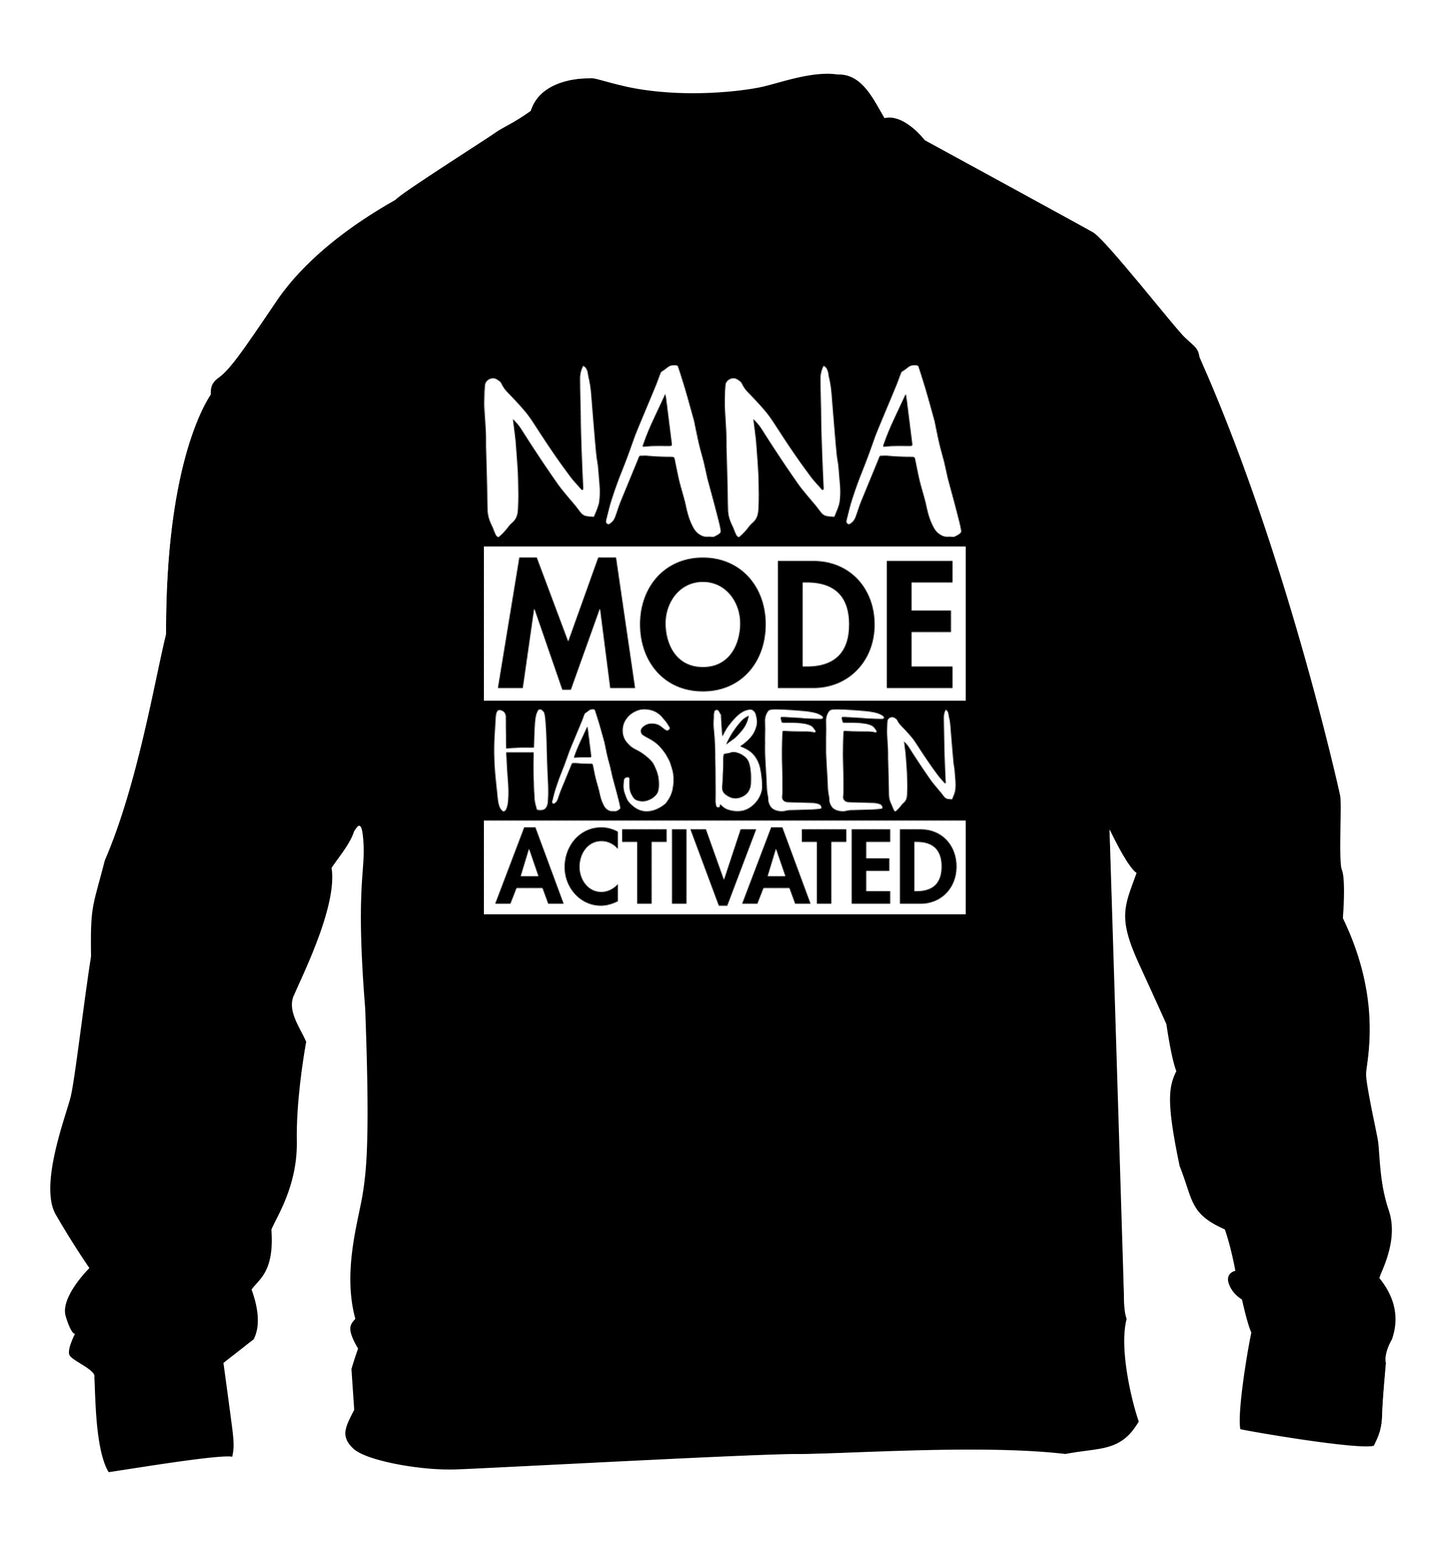 Nana mode activated children's black sweater 12-14 Years